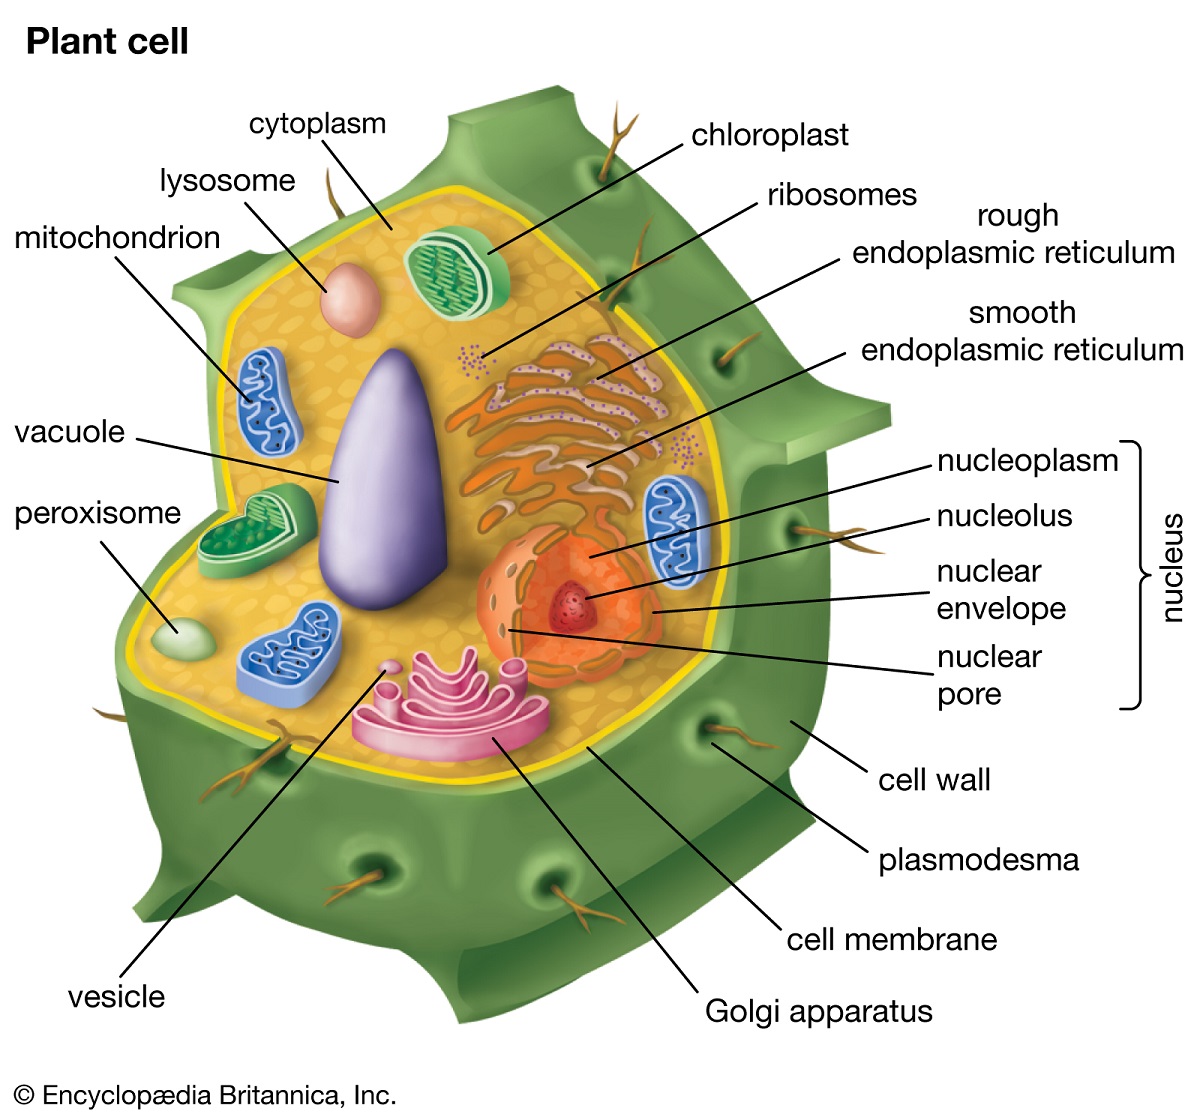 gas yang membantu tumbuhan dalam proses fotosintesis disebut